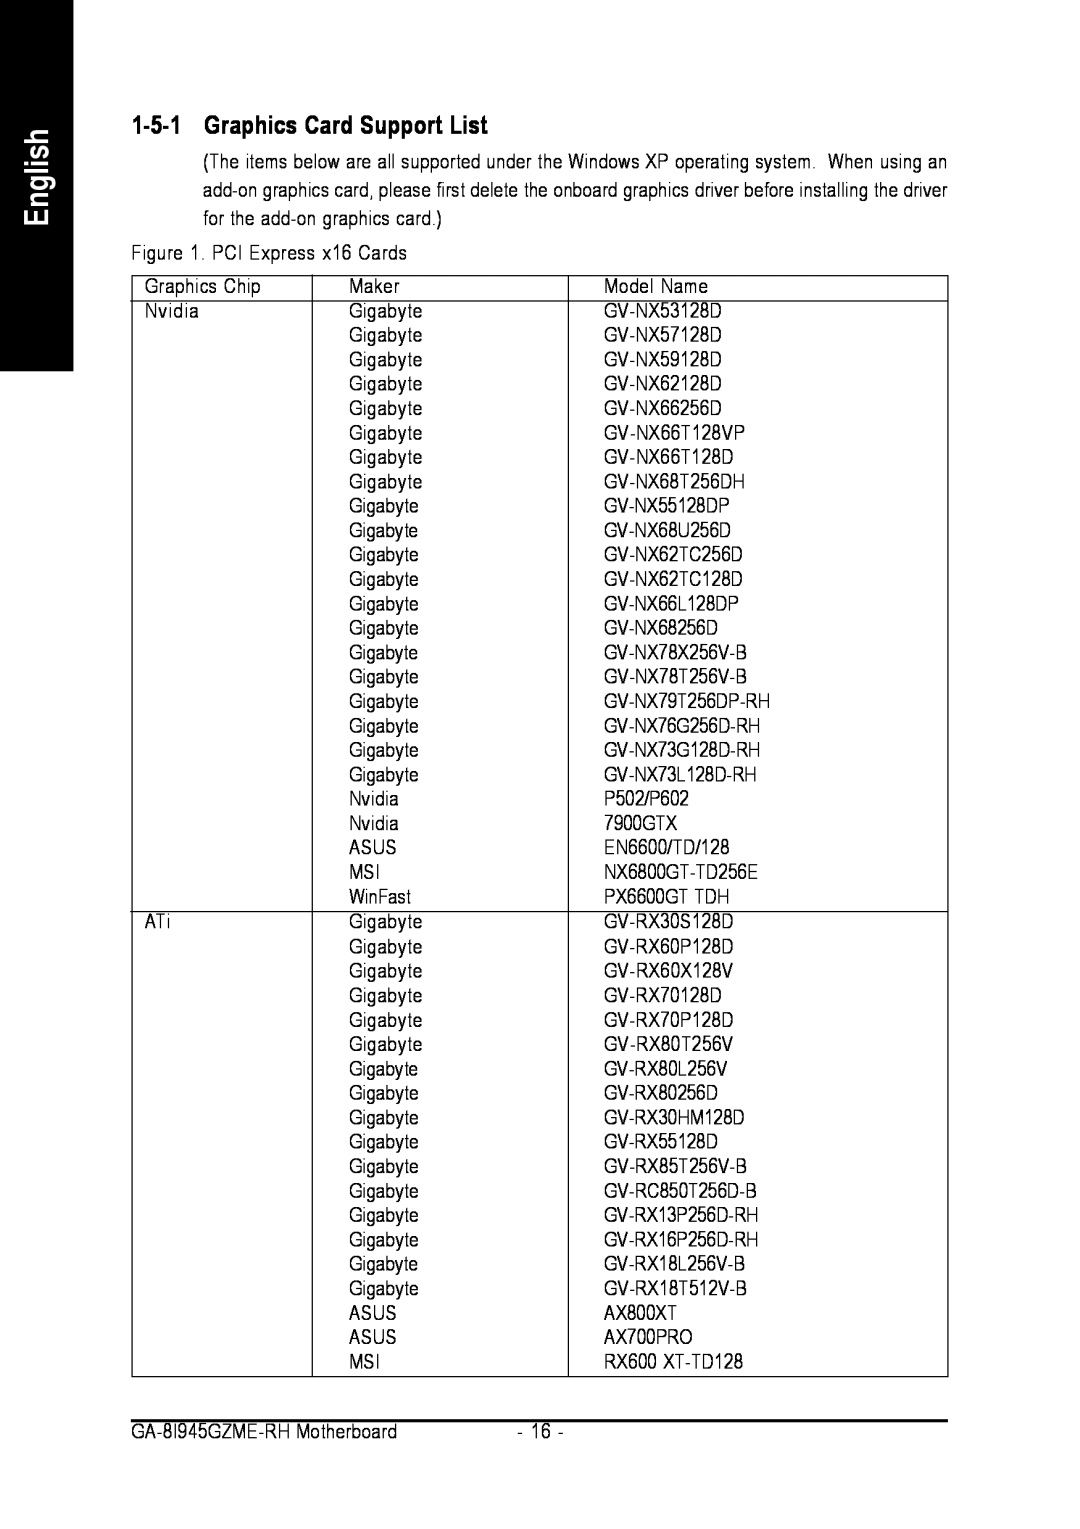 Intel GA-8I945GZME-RH user manual Graphics Card Support List, English 